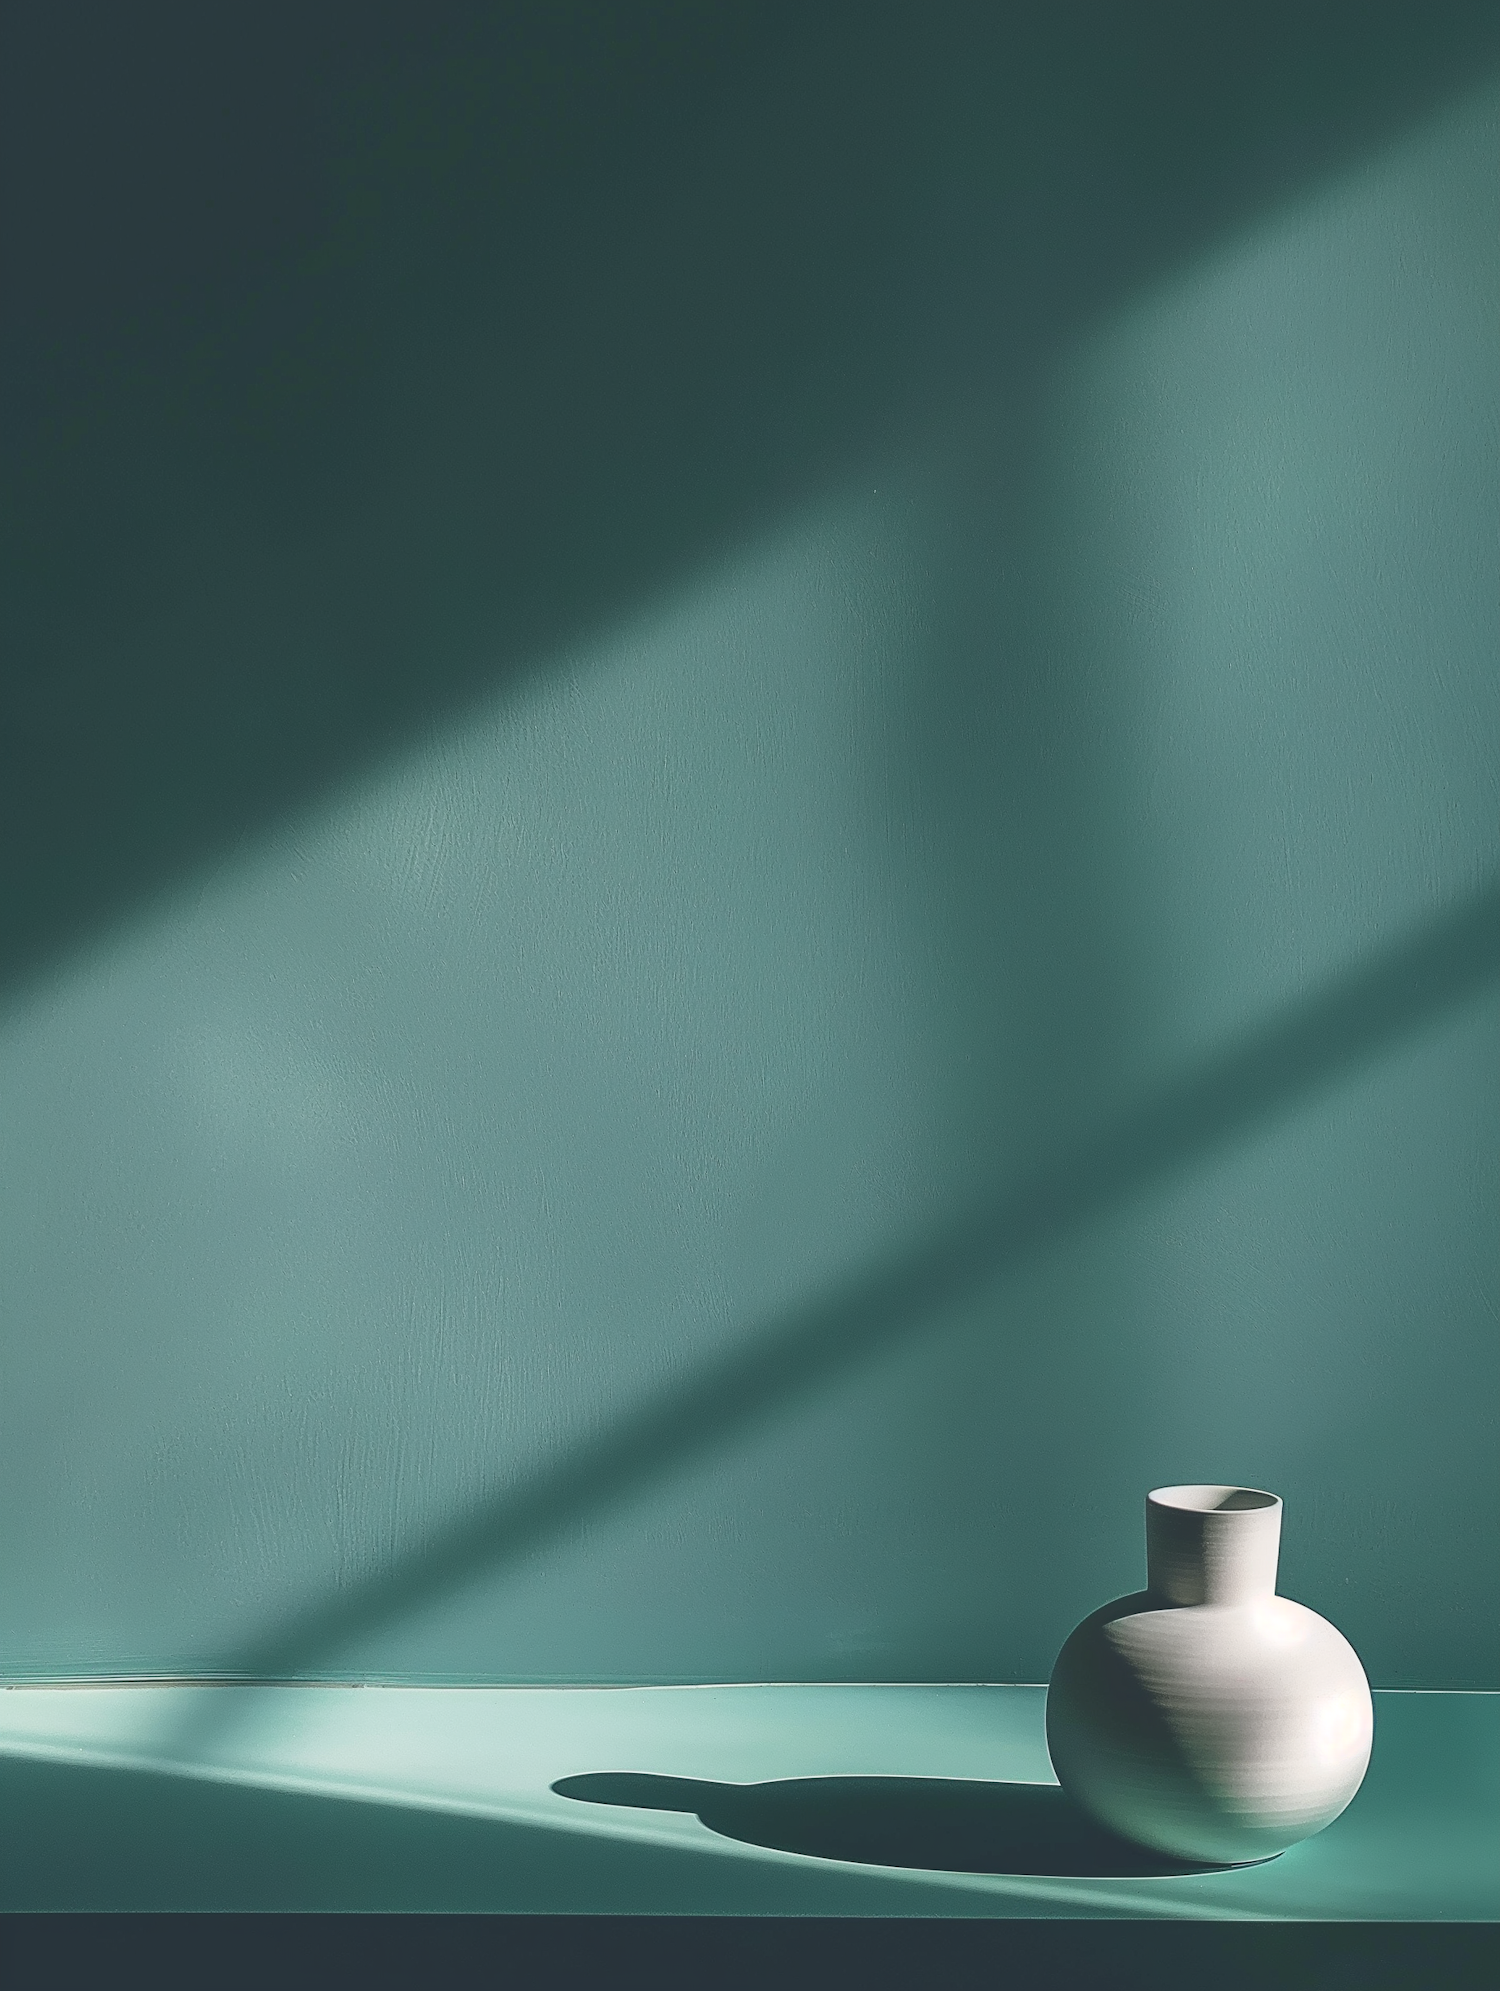 Minimalist White Vase with Teal Shadows